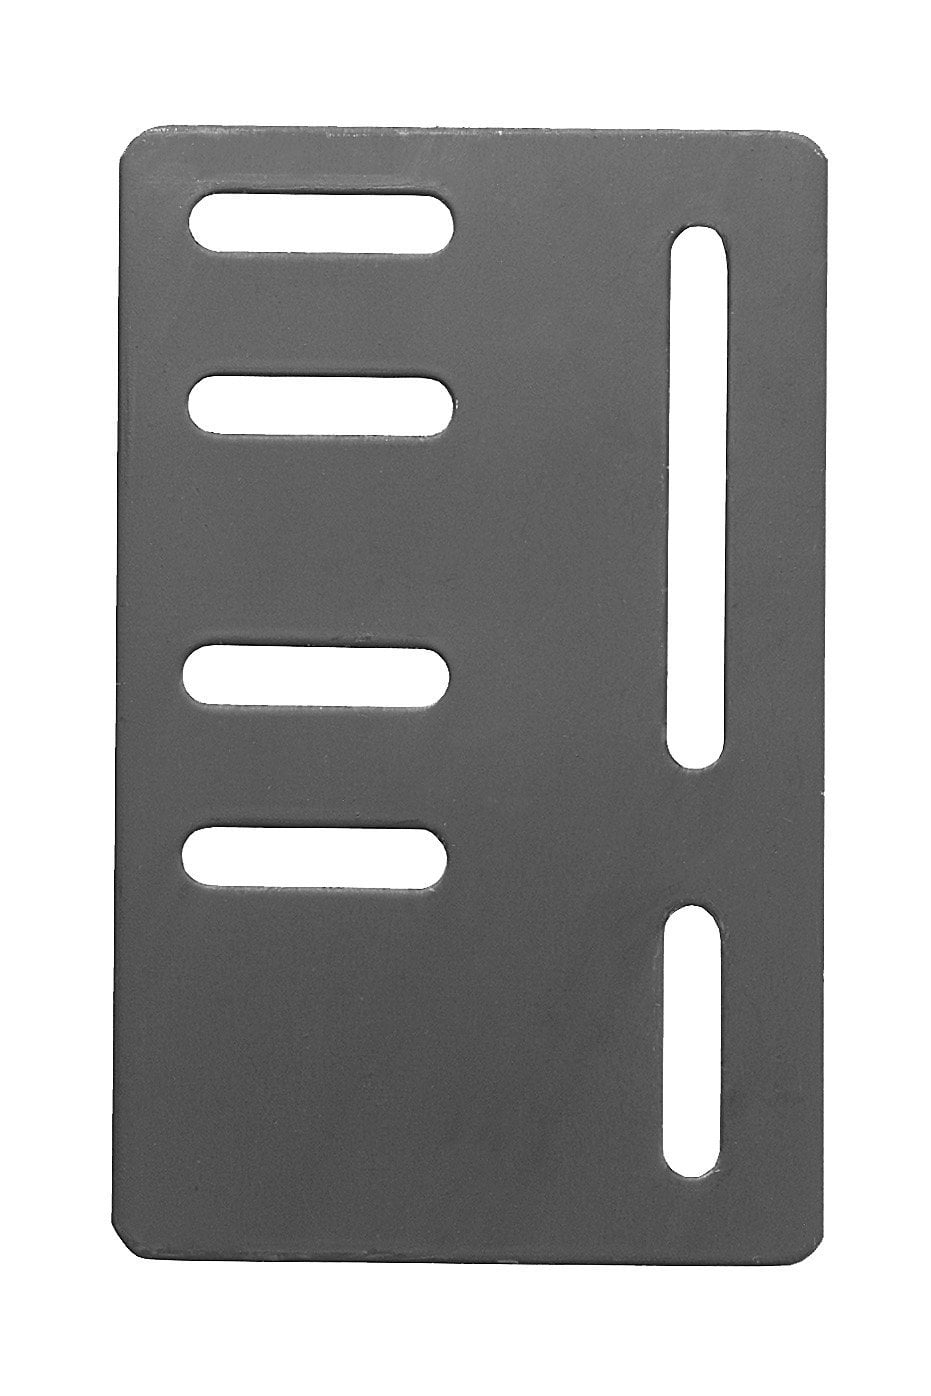 F-autopart Bed Frame Headboard Bracket Modification Modi-Plate ~Set of 2 Plates 